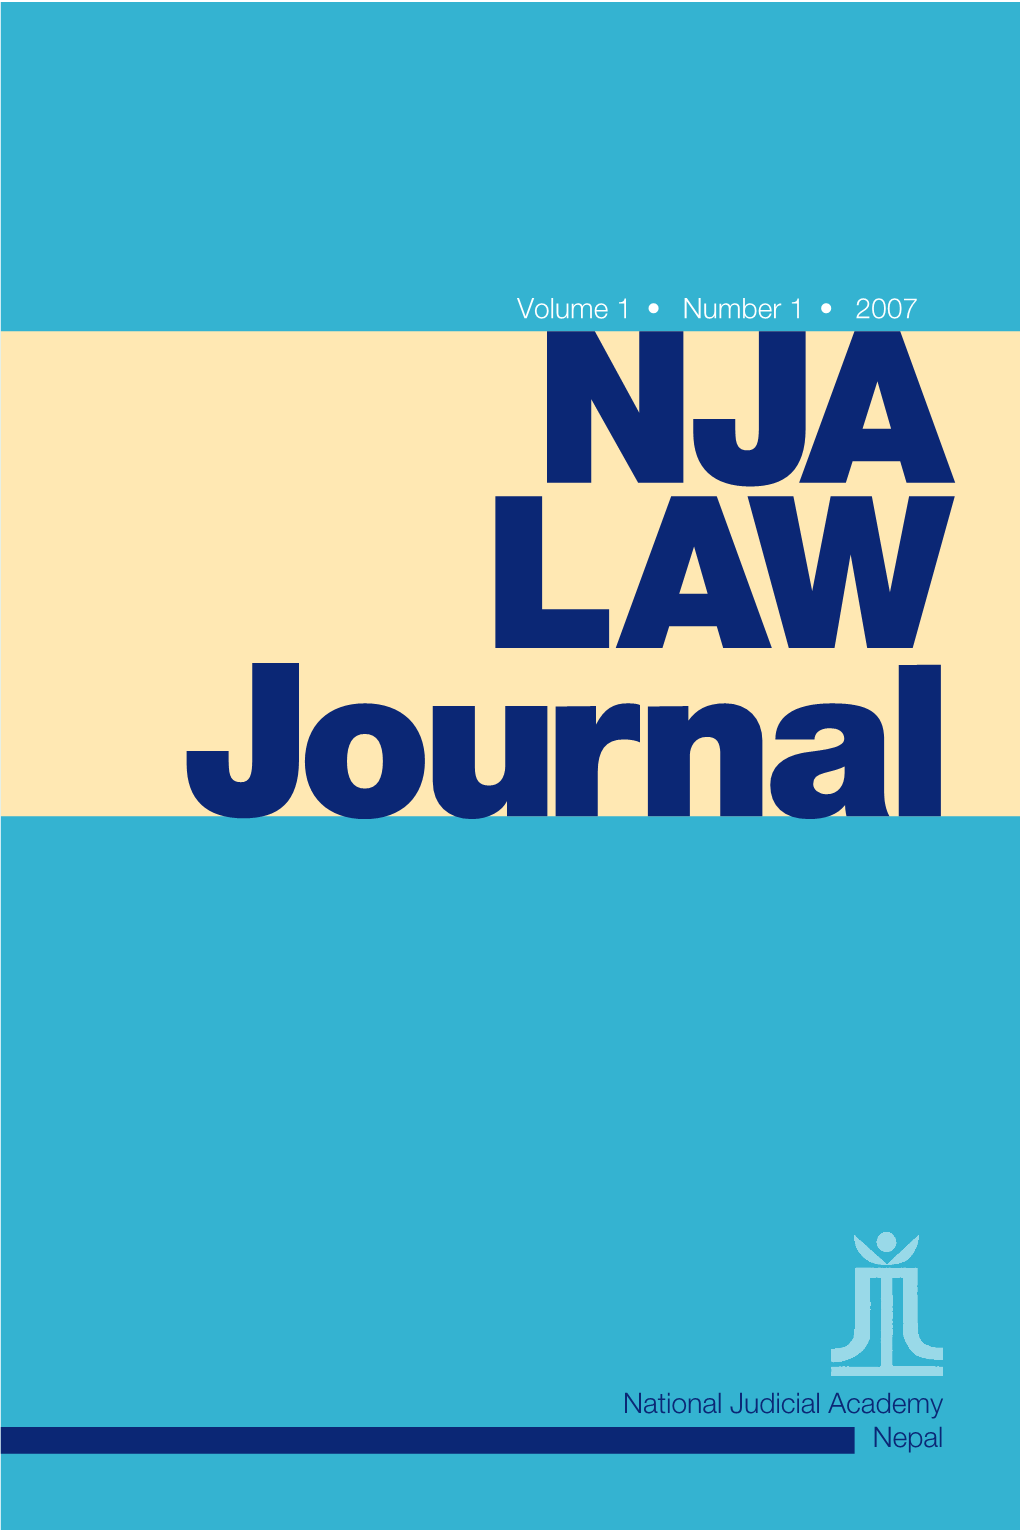 NJA Law Journal 2007